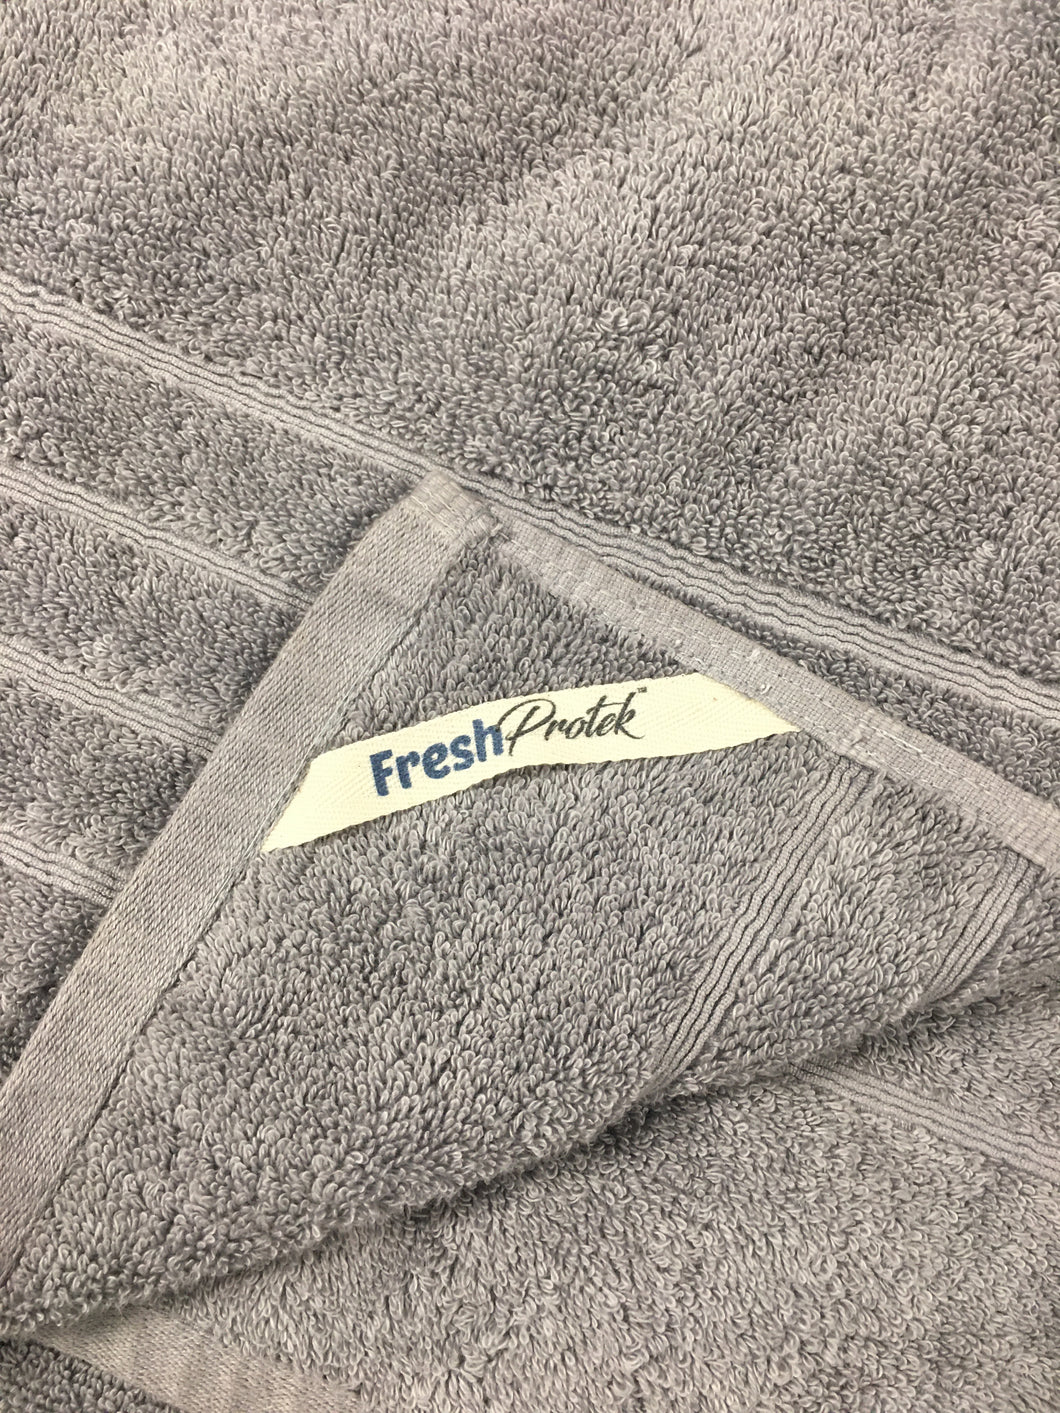 FreshProtek Towel: Quick Drying, Anti-Odor